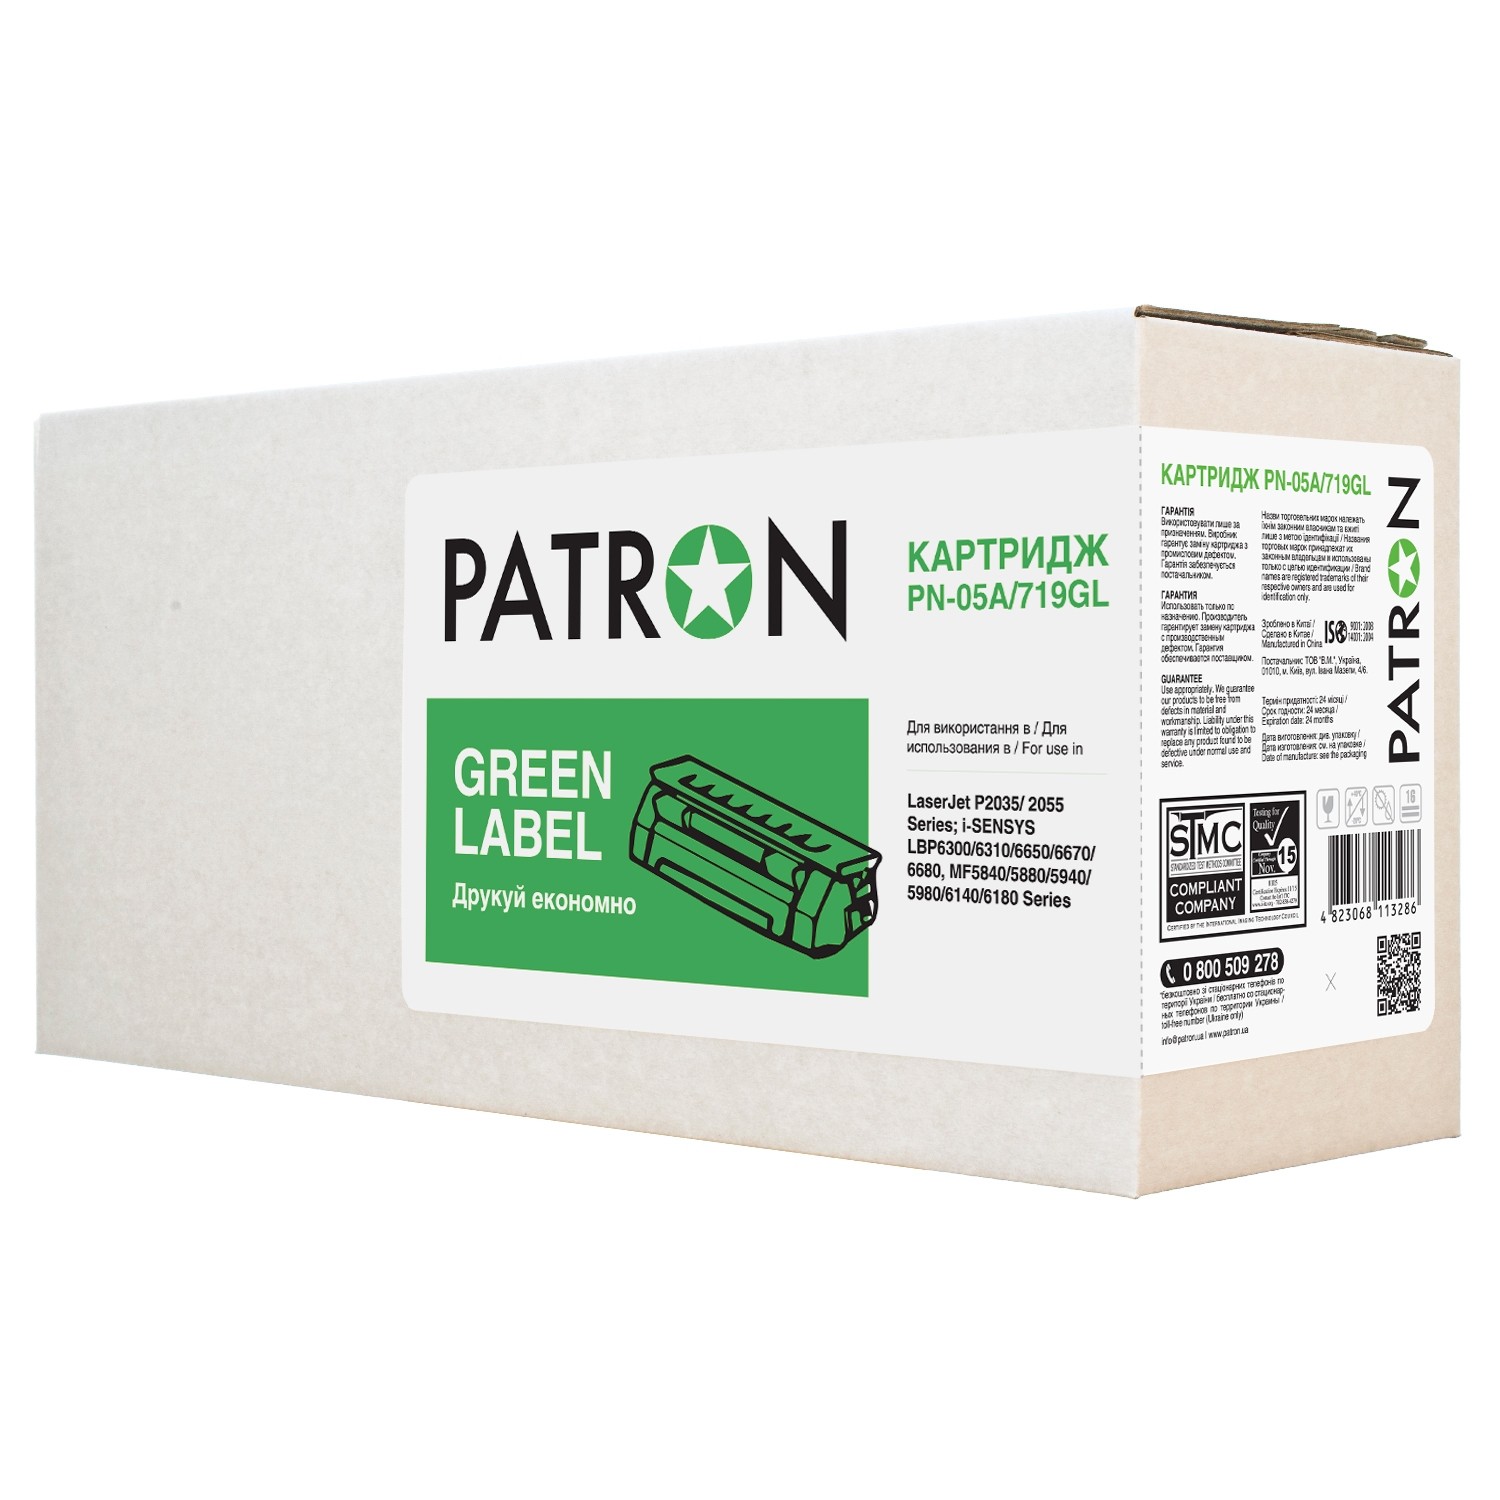 КАРТРИДЖ HP LJ CE505A/CANON 719 (PN-05A/719GL) PATRON GREEN Label